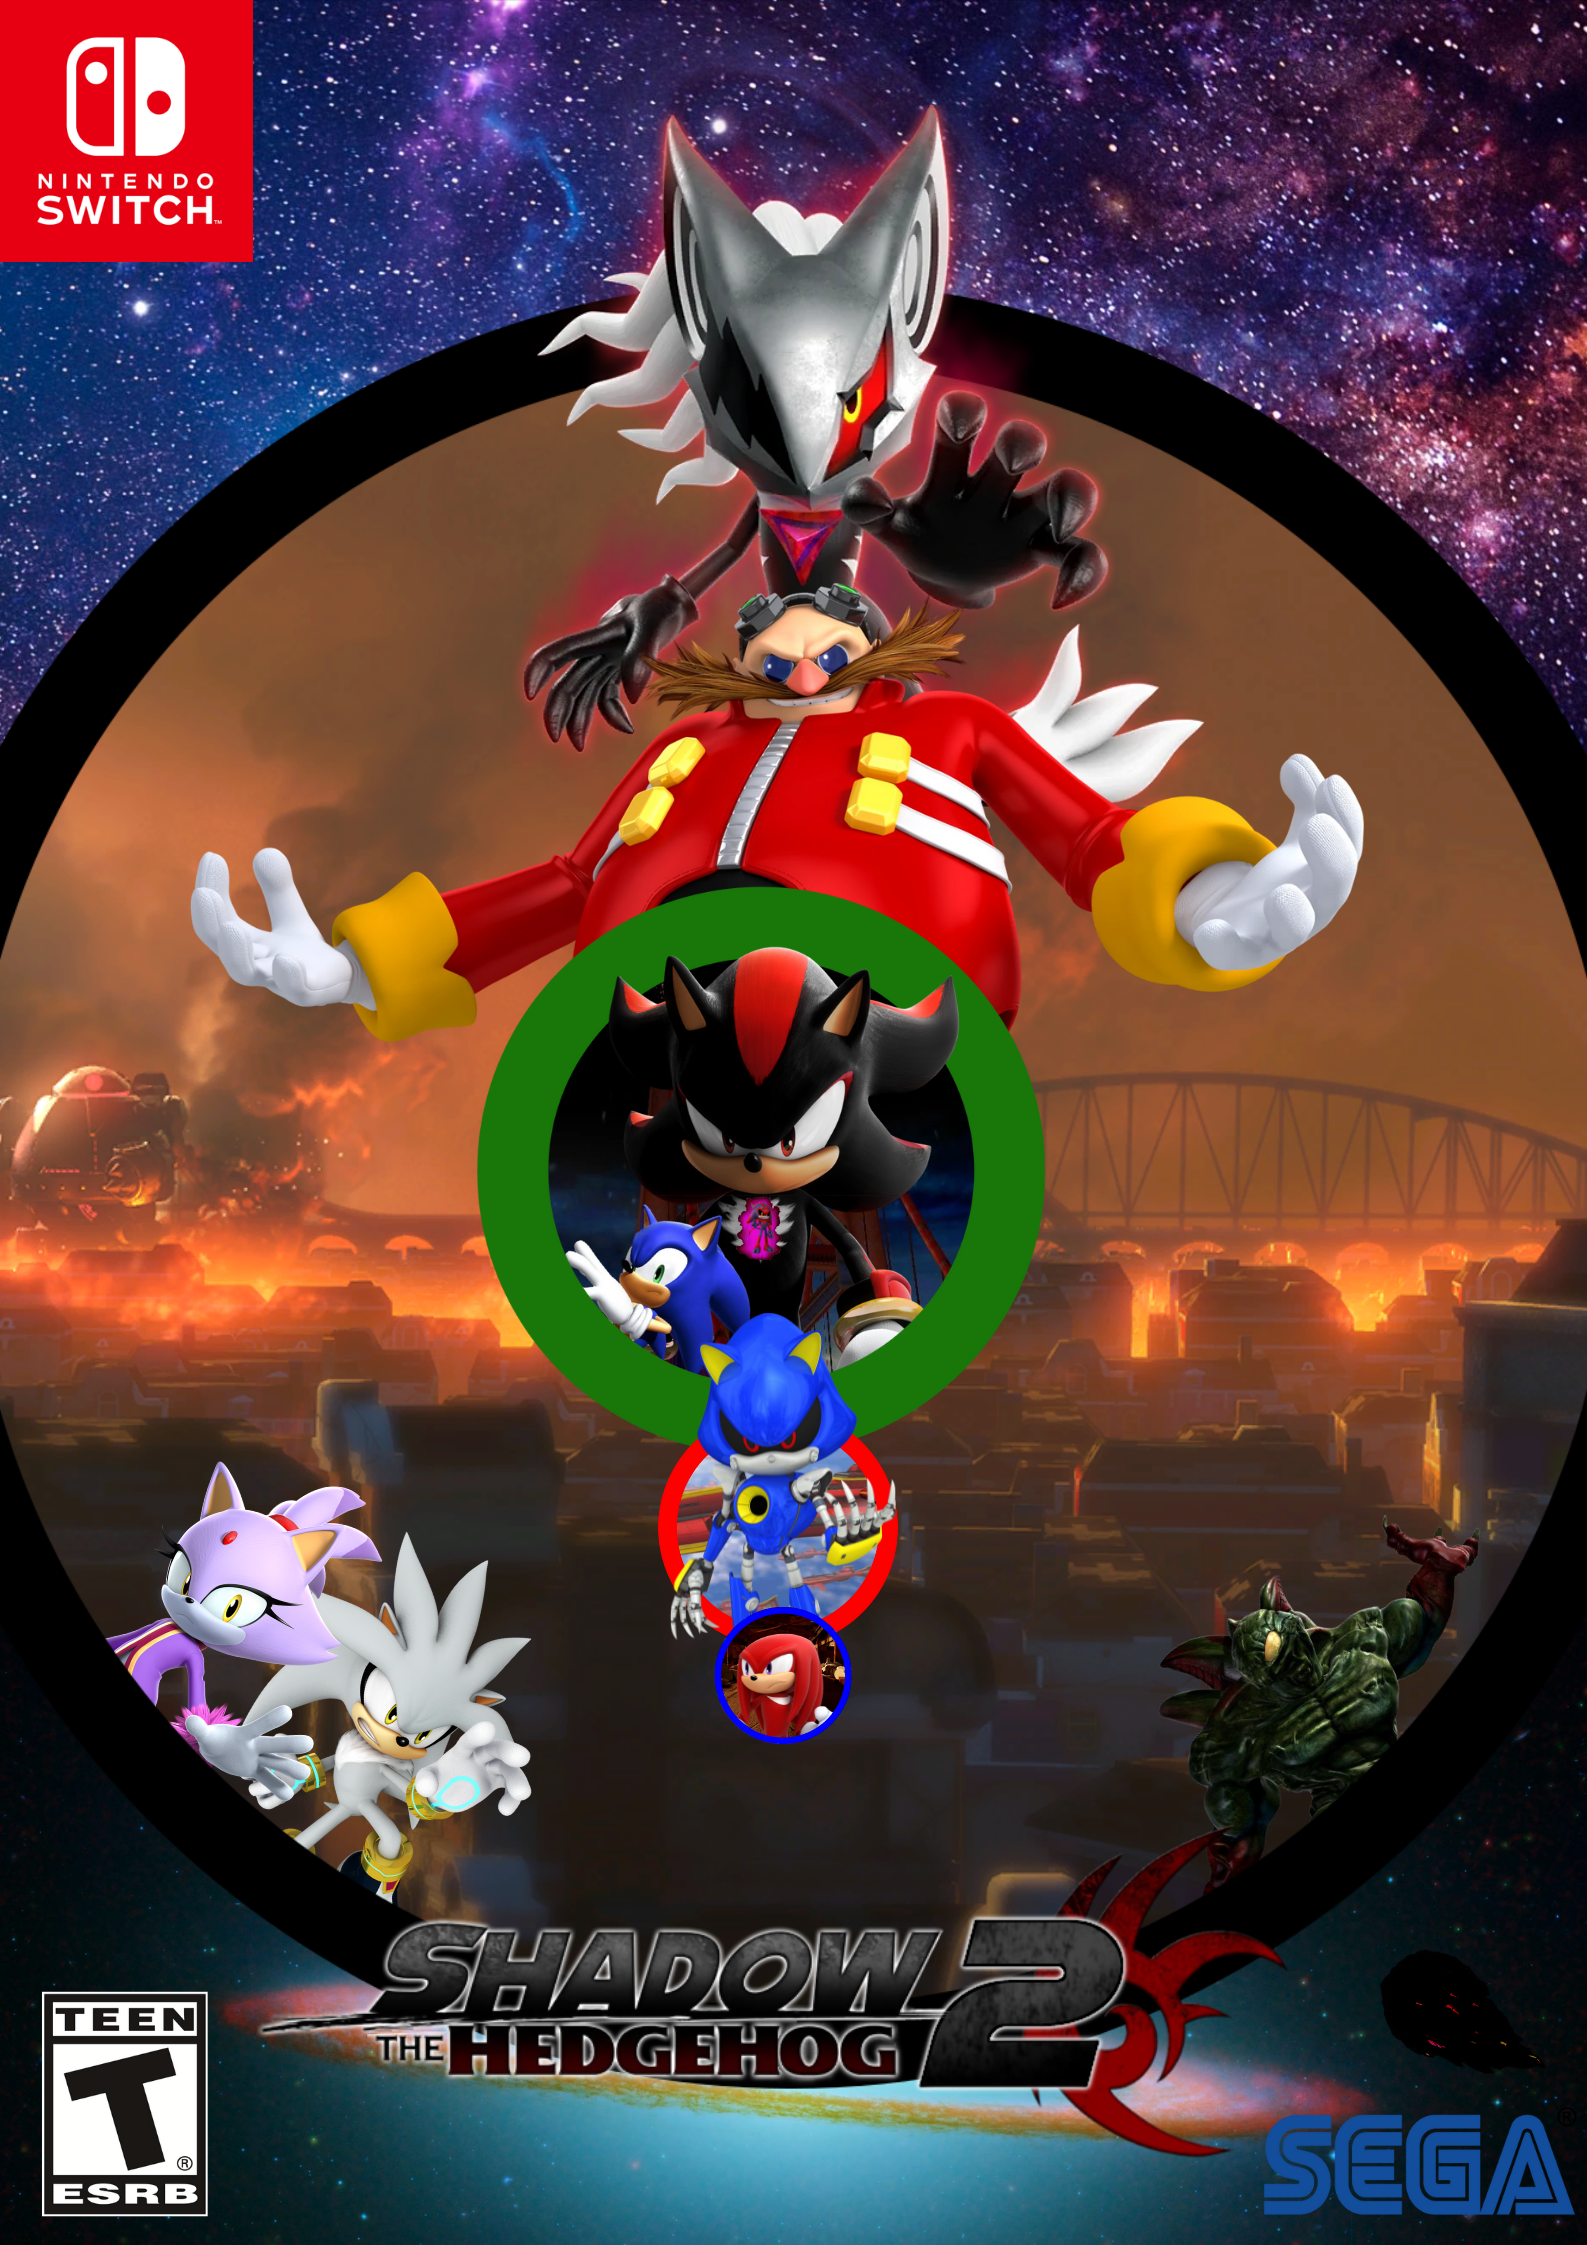 SEGA AGES Sonic The Hedgehog 2 for Nintendo Switch - Nintendo